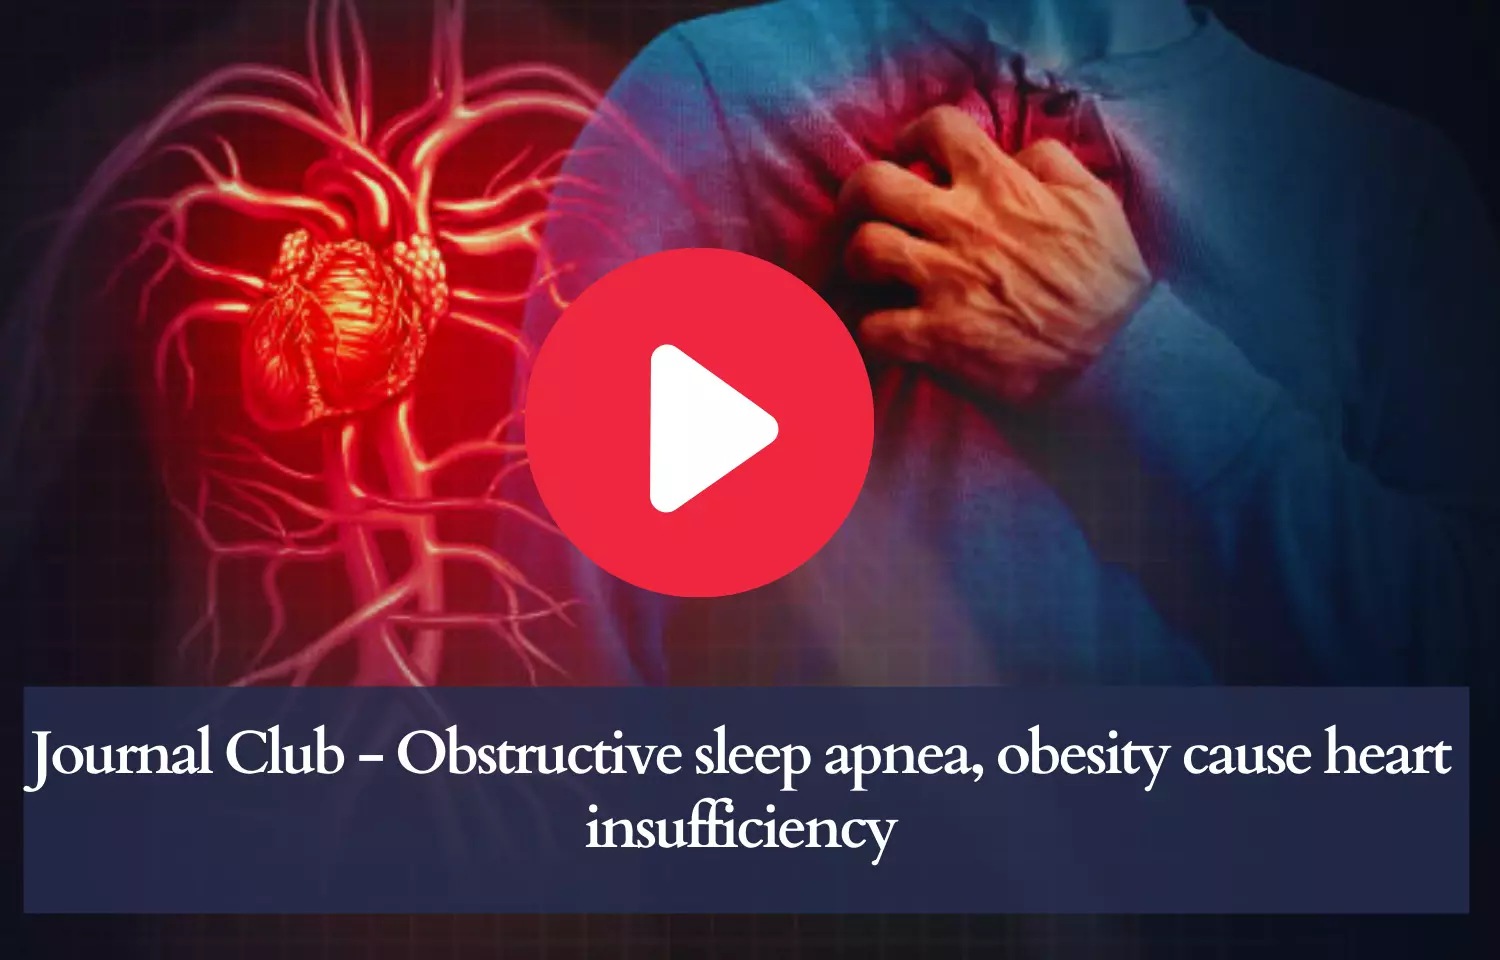 Journal Club - Obstructive sleep apnea, obesity to cause heart insufficiency